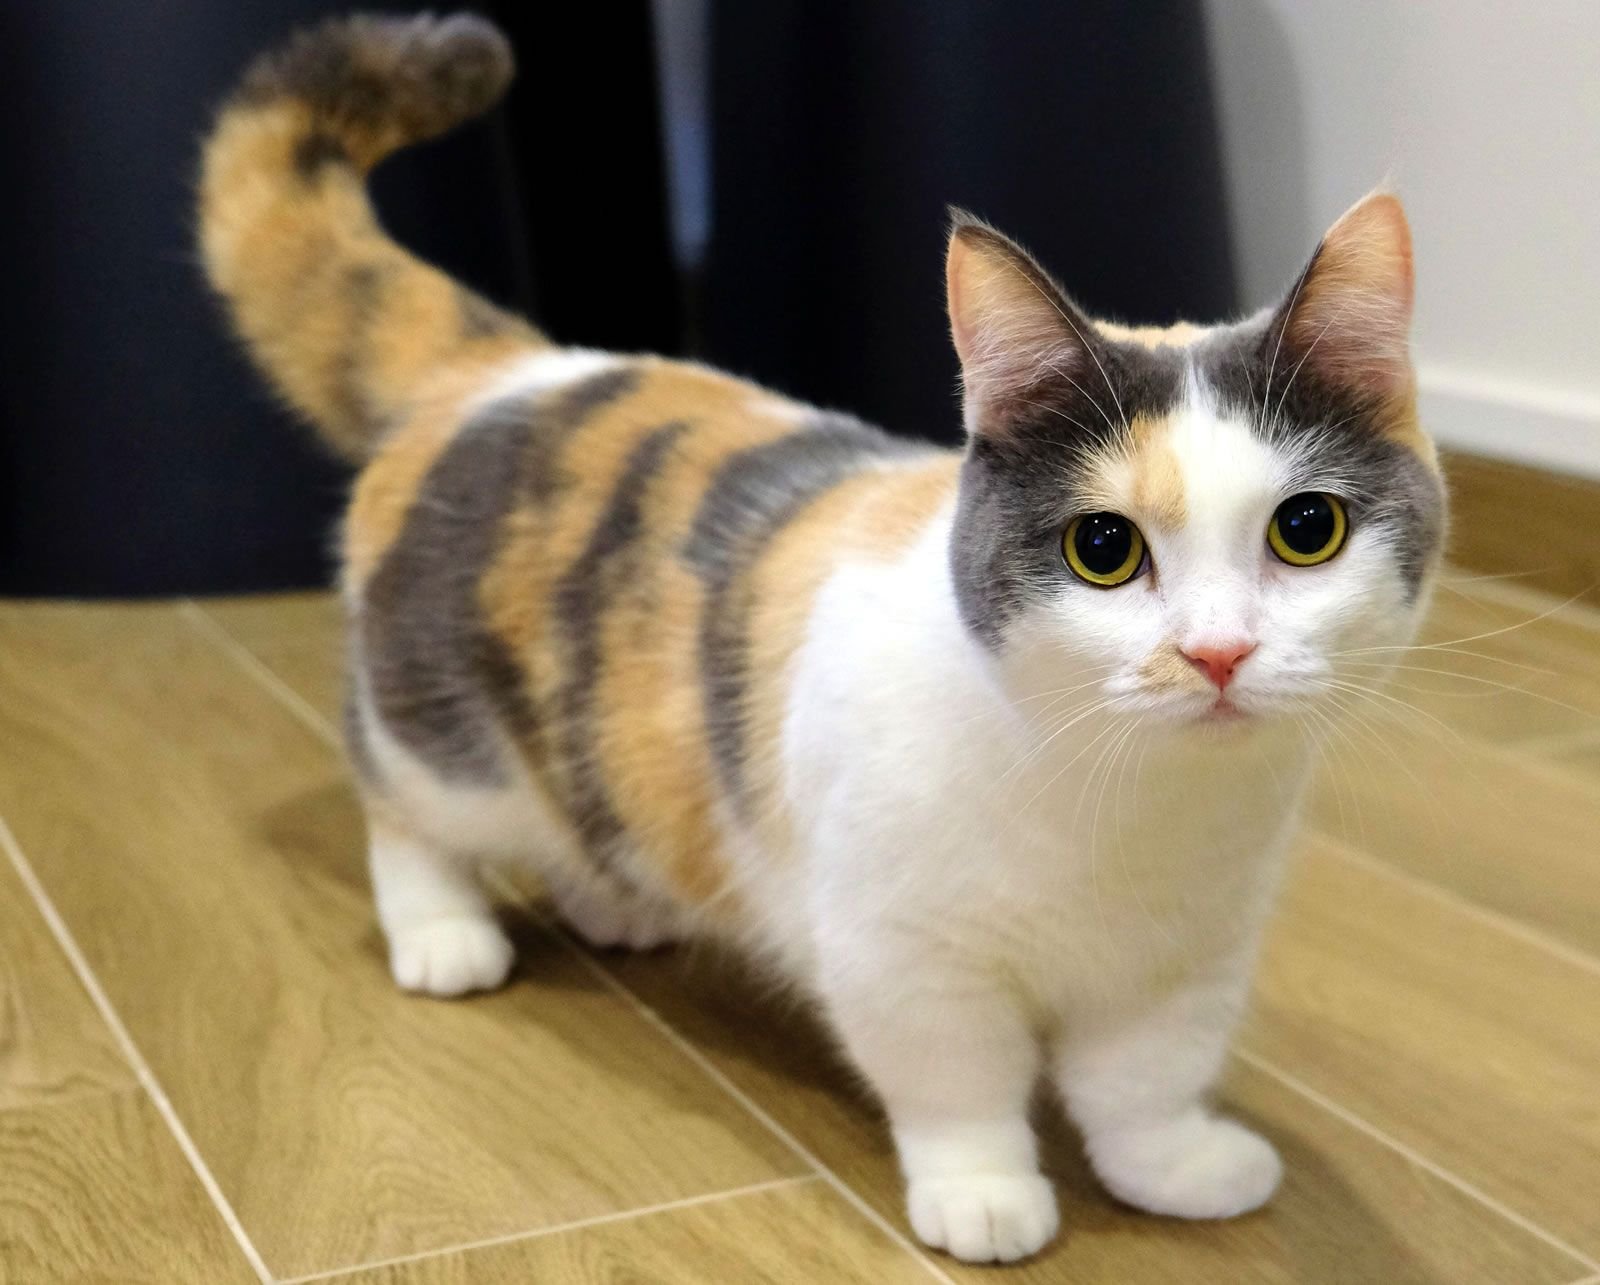 World's Cutest Midget Cats You'll Love